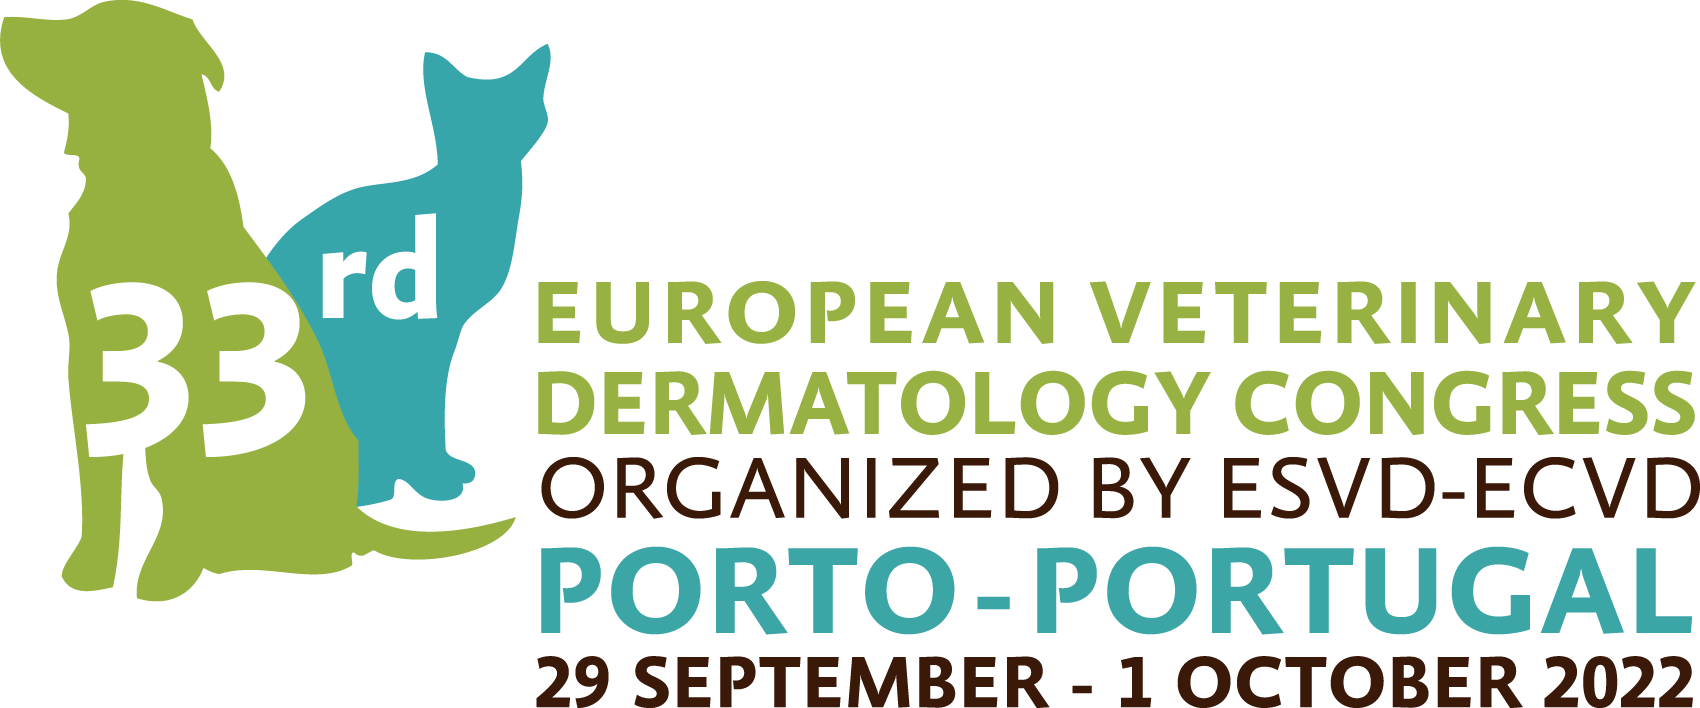 ESVD-ECVD 33rd European Veterinary Dermatology Congress